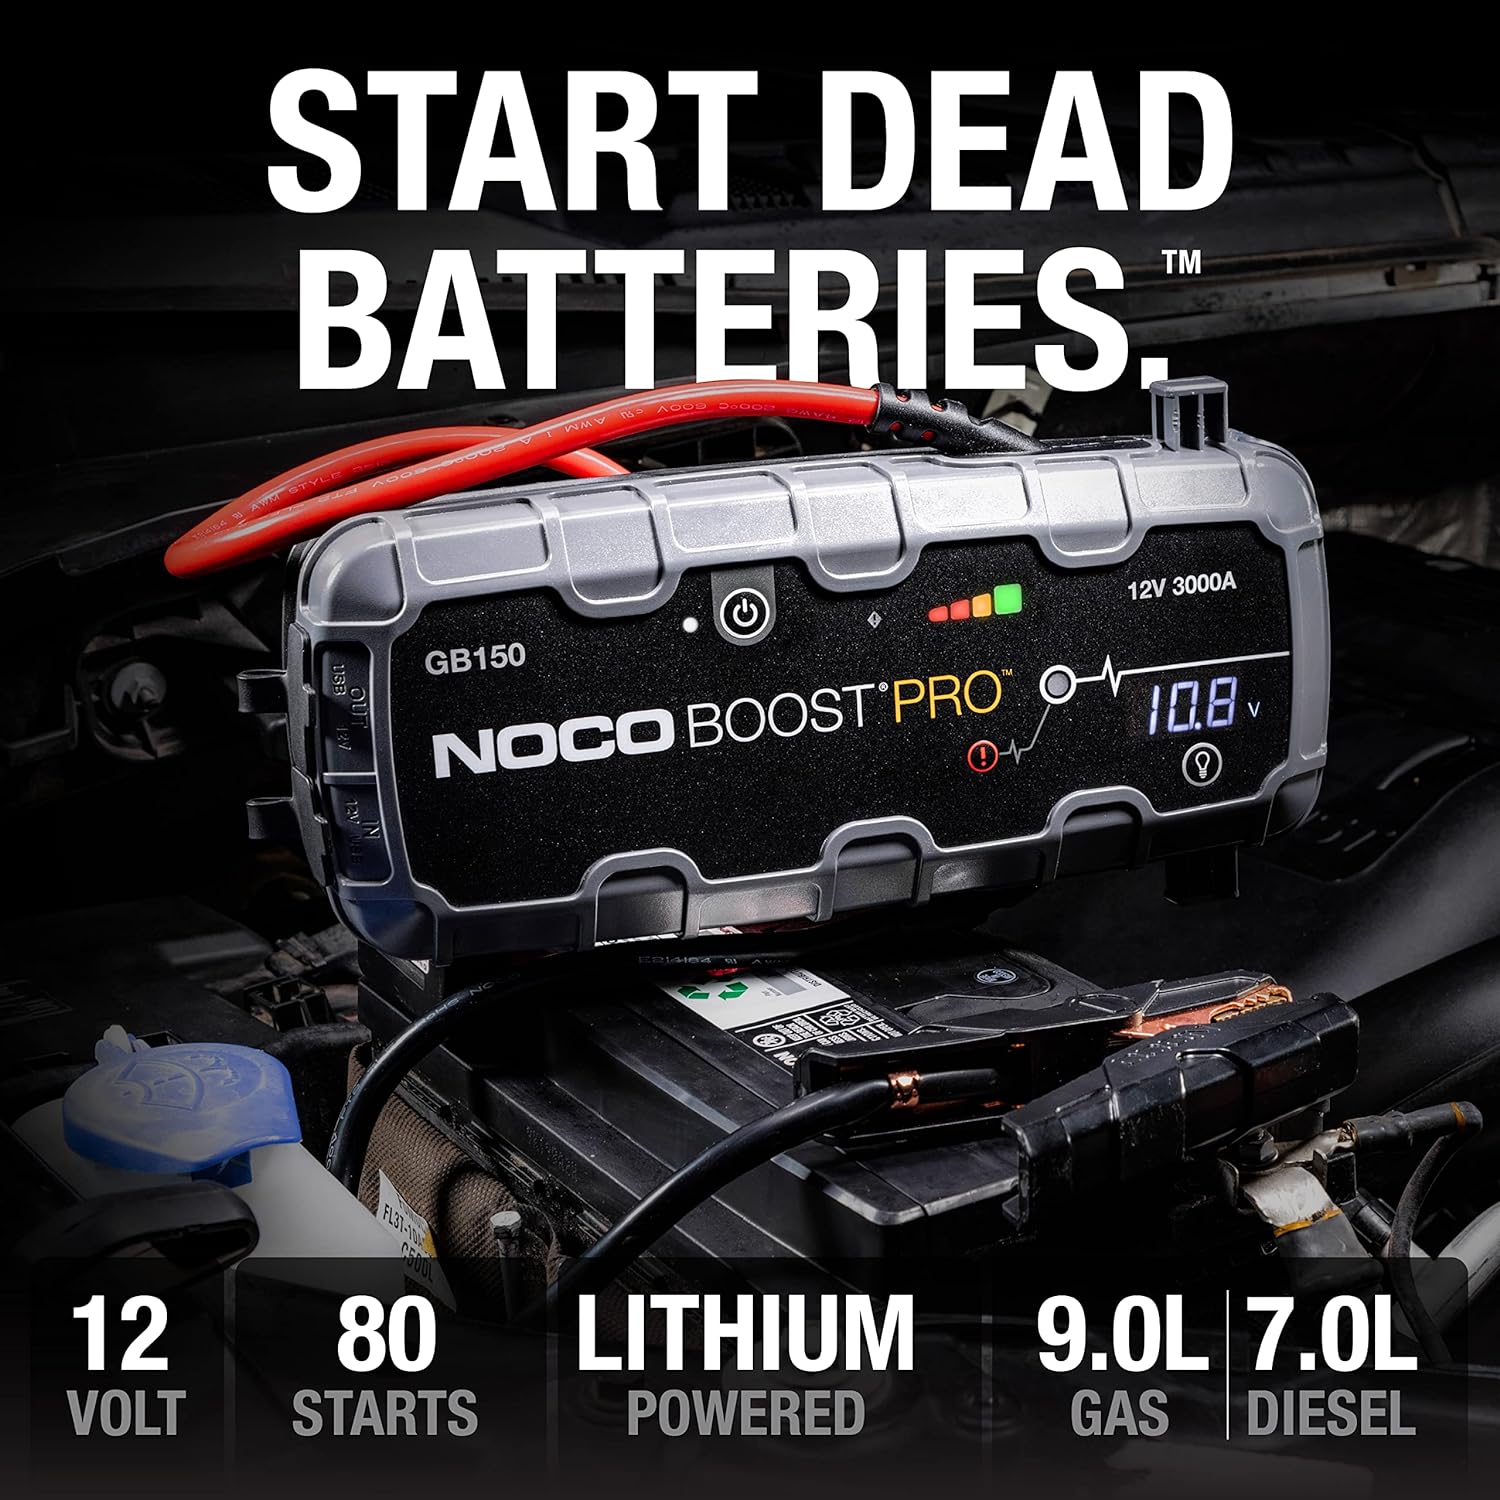 NOCO Boost Pro 3000A 12V UltraSafe Portable Lithium Jump Starter